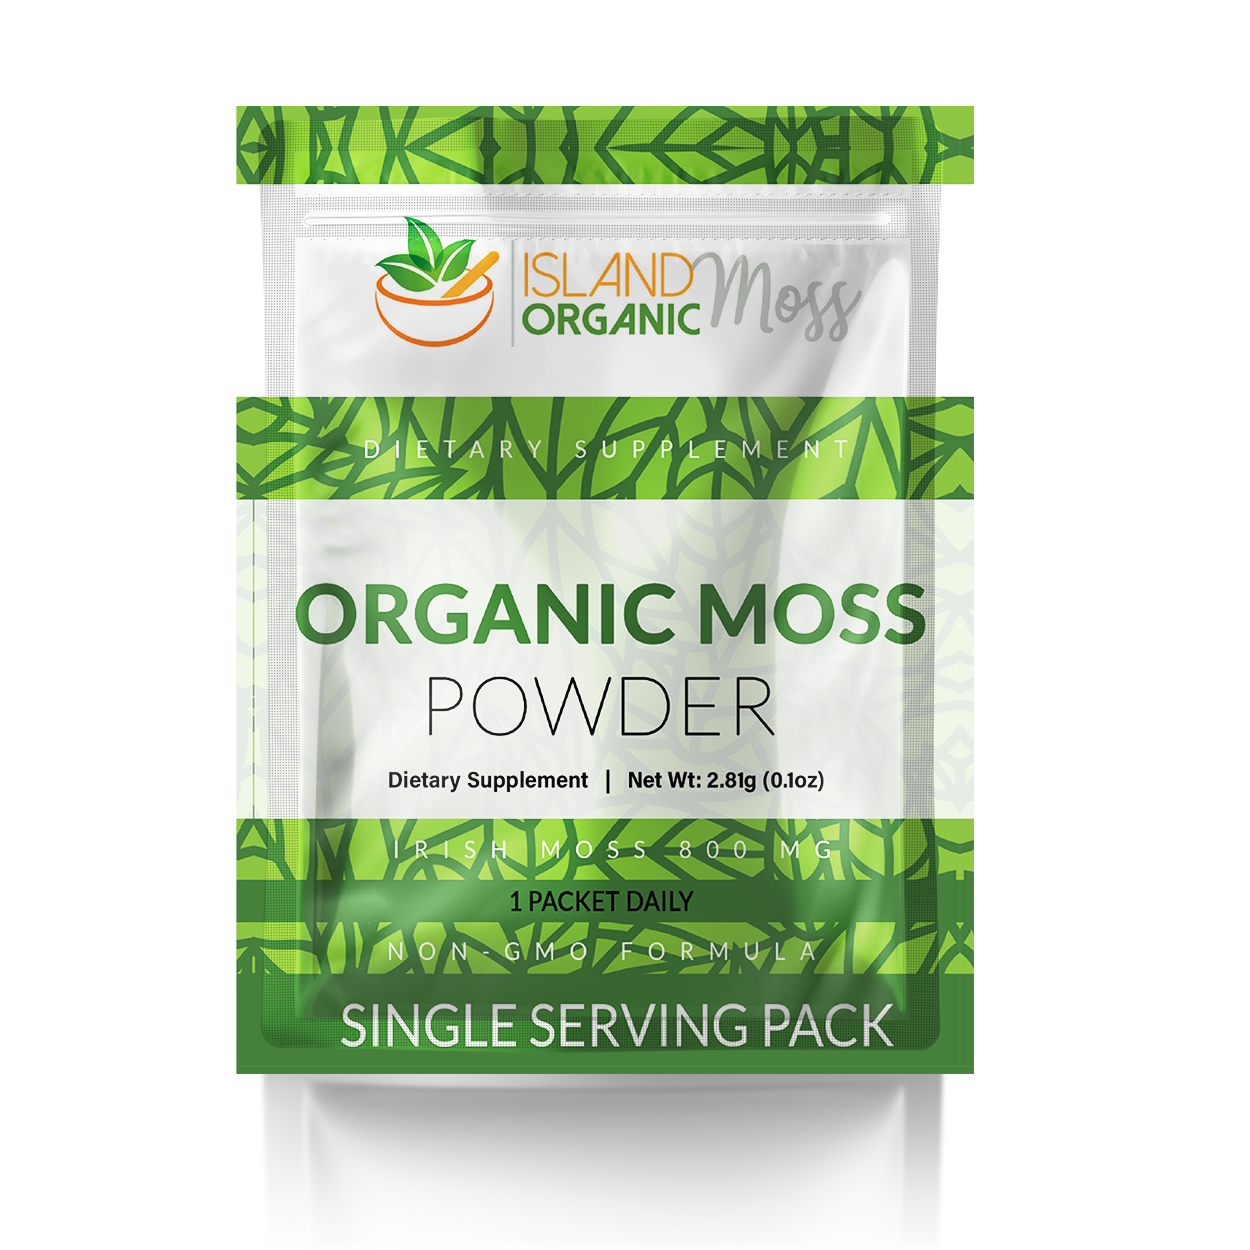 Sea Moss Drink Mix  - Wild Crafted Sea Moss Drink Mix Powder